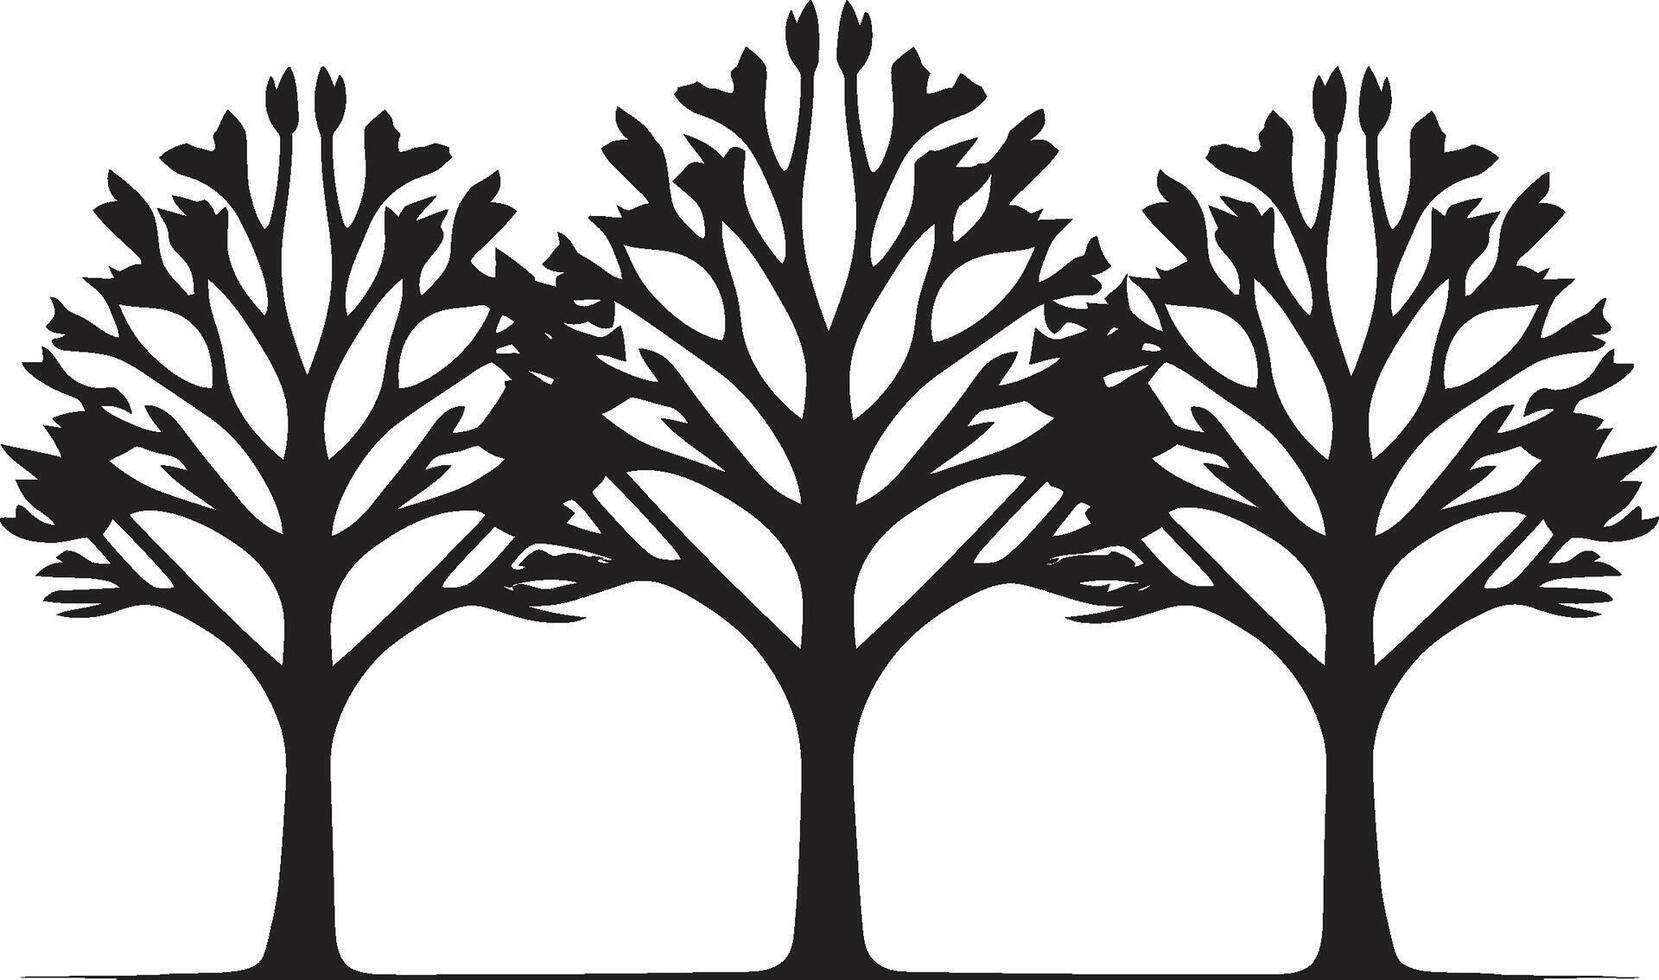 Blossom Mark Iconic Tree Emblem Sylvan Identity Vector Logo Tree